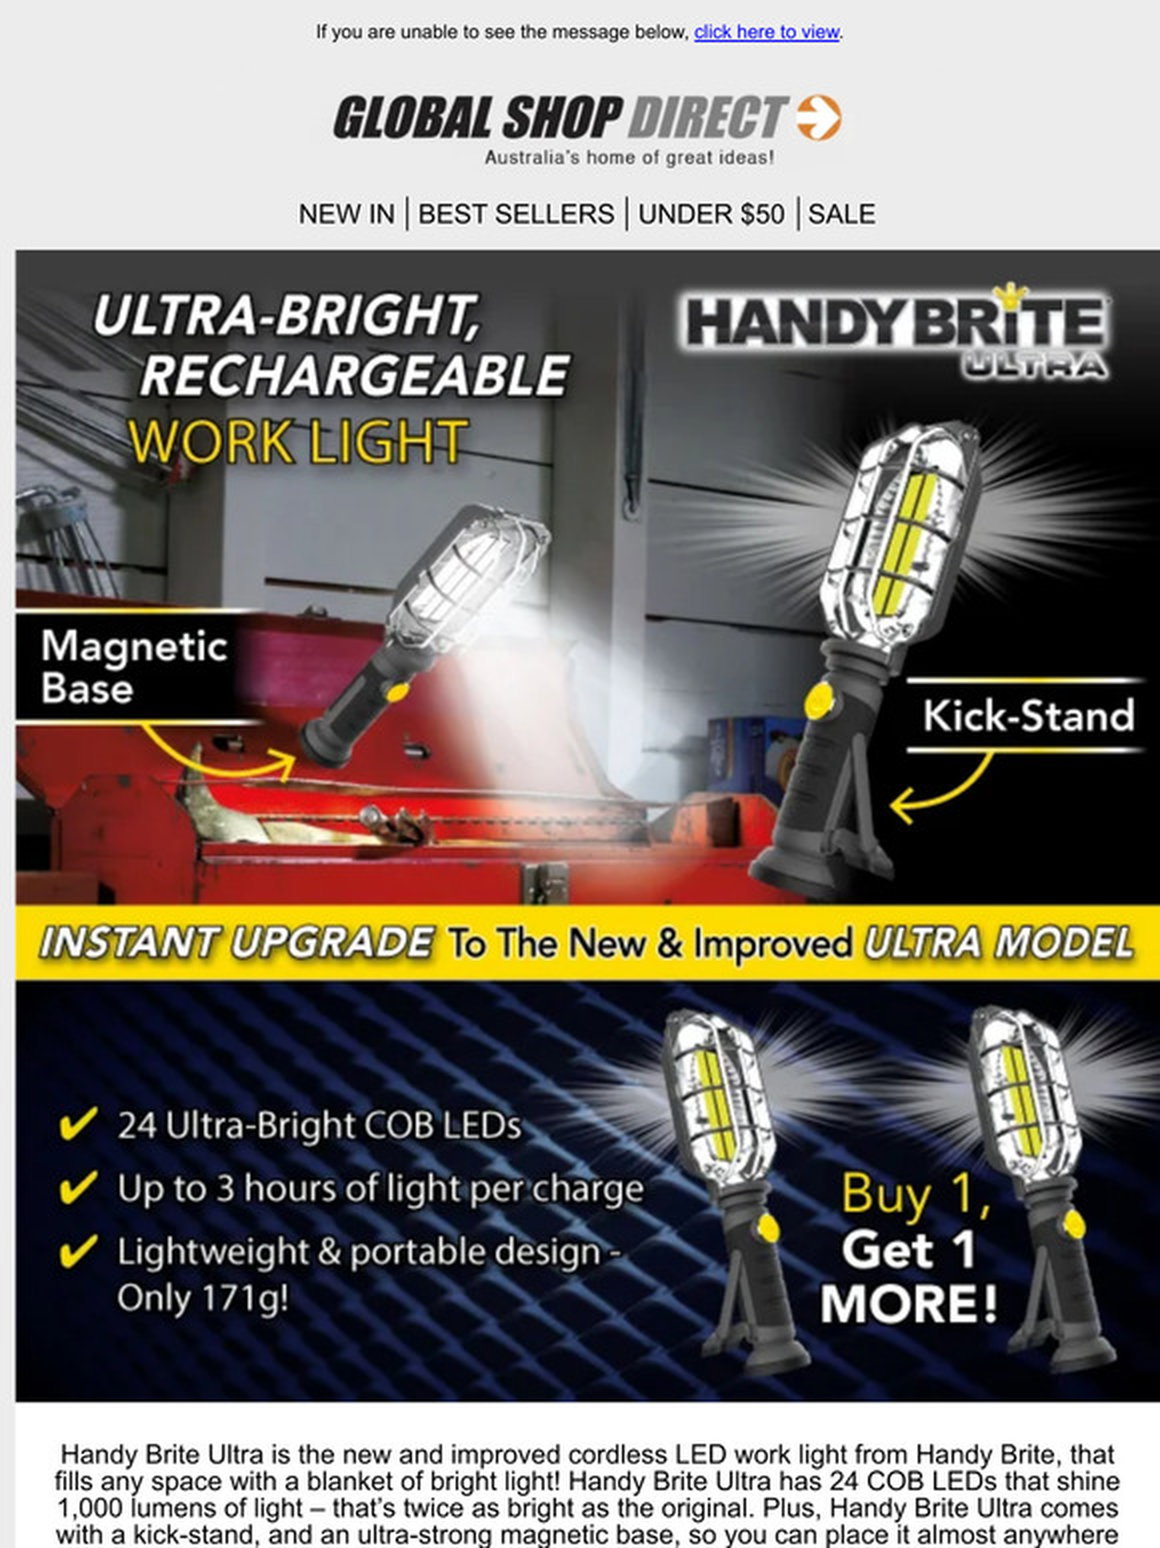 New In: Handy Brite Ultra - Ultra-Bright, Portable Work Light